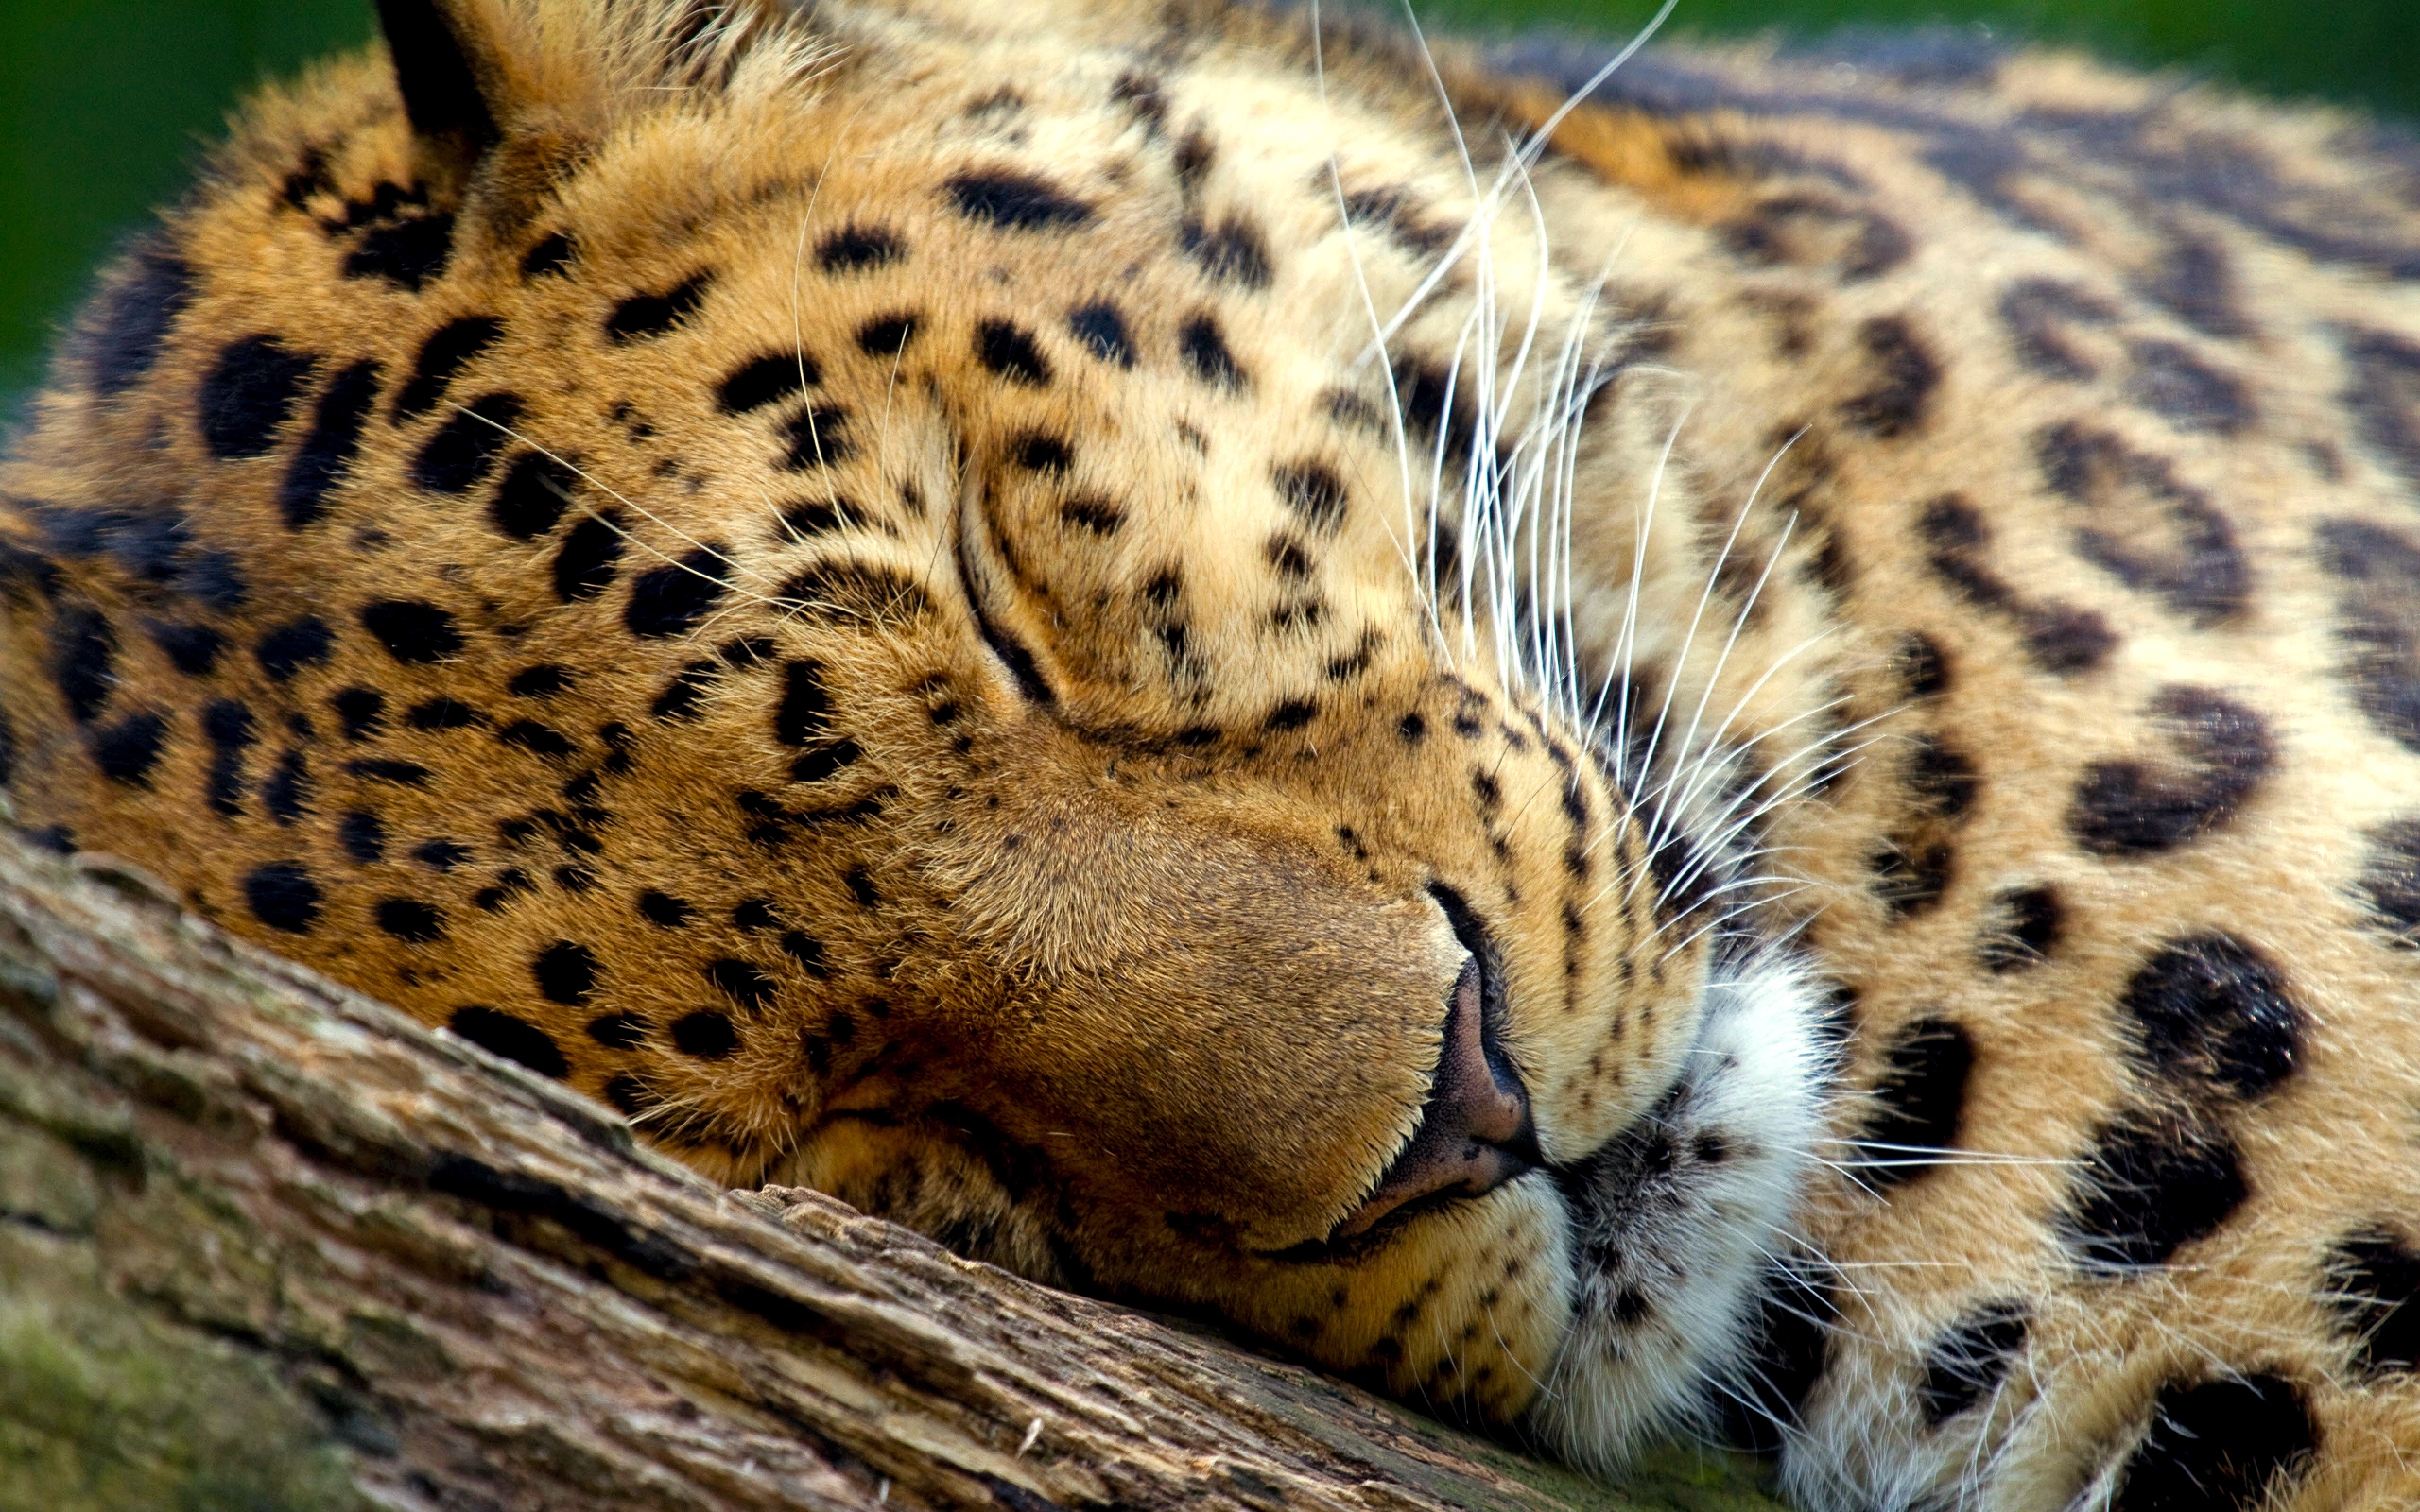 Cute Leopard Sleeping for 2560 x 1600 widescreen resolution